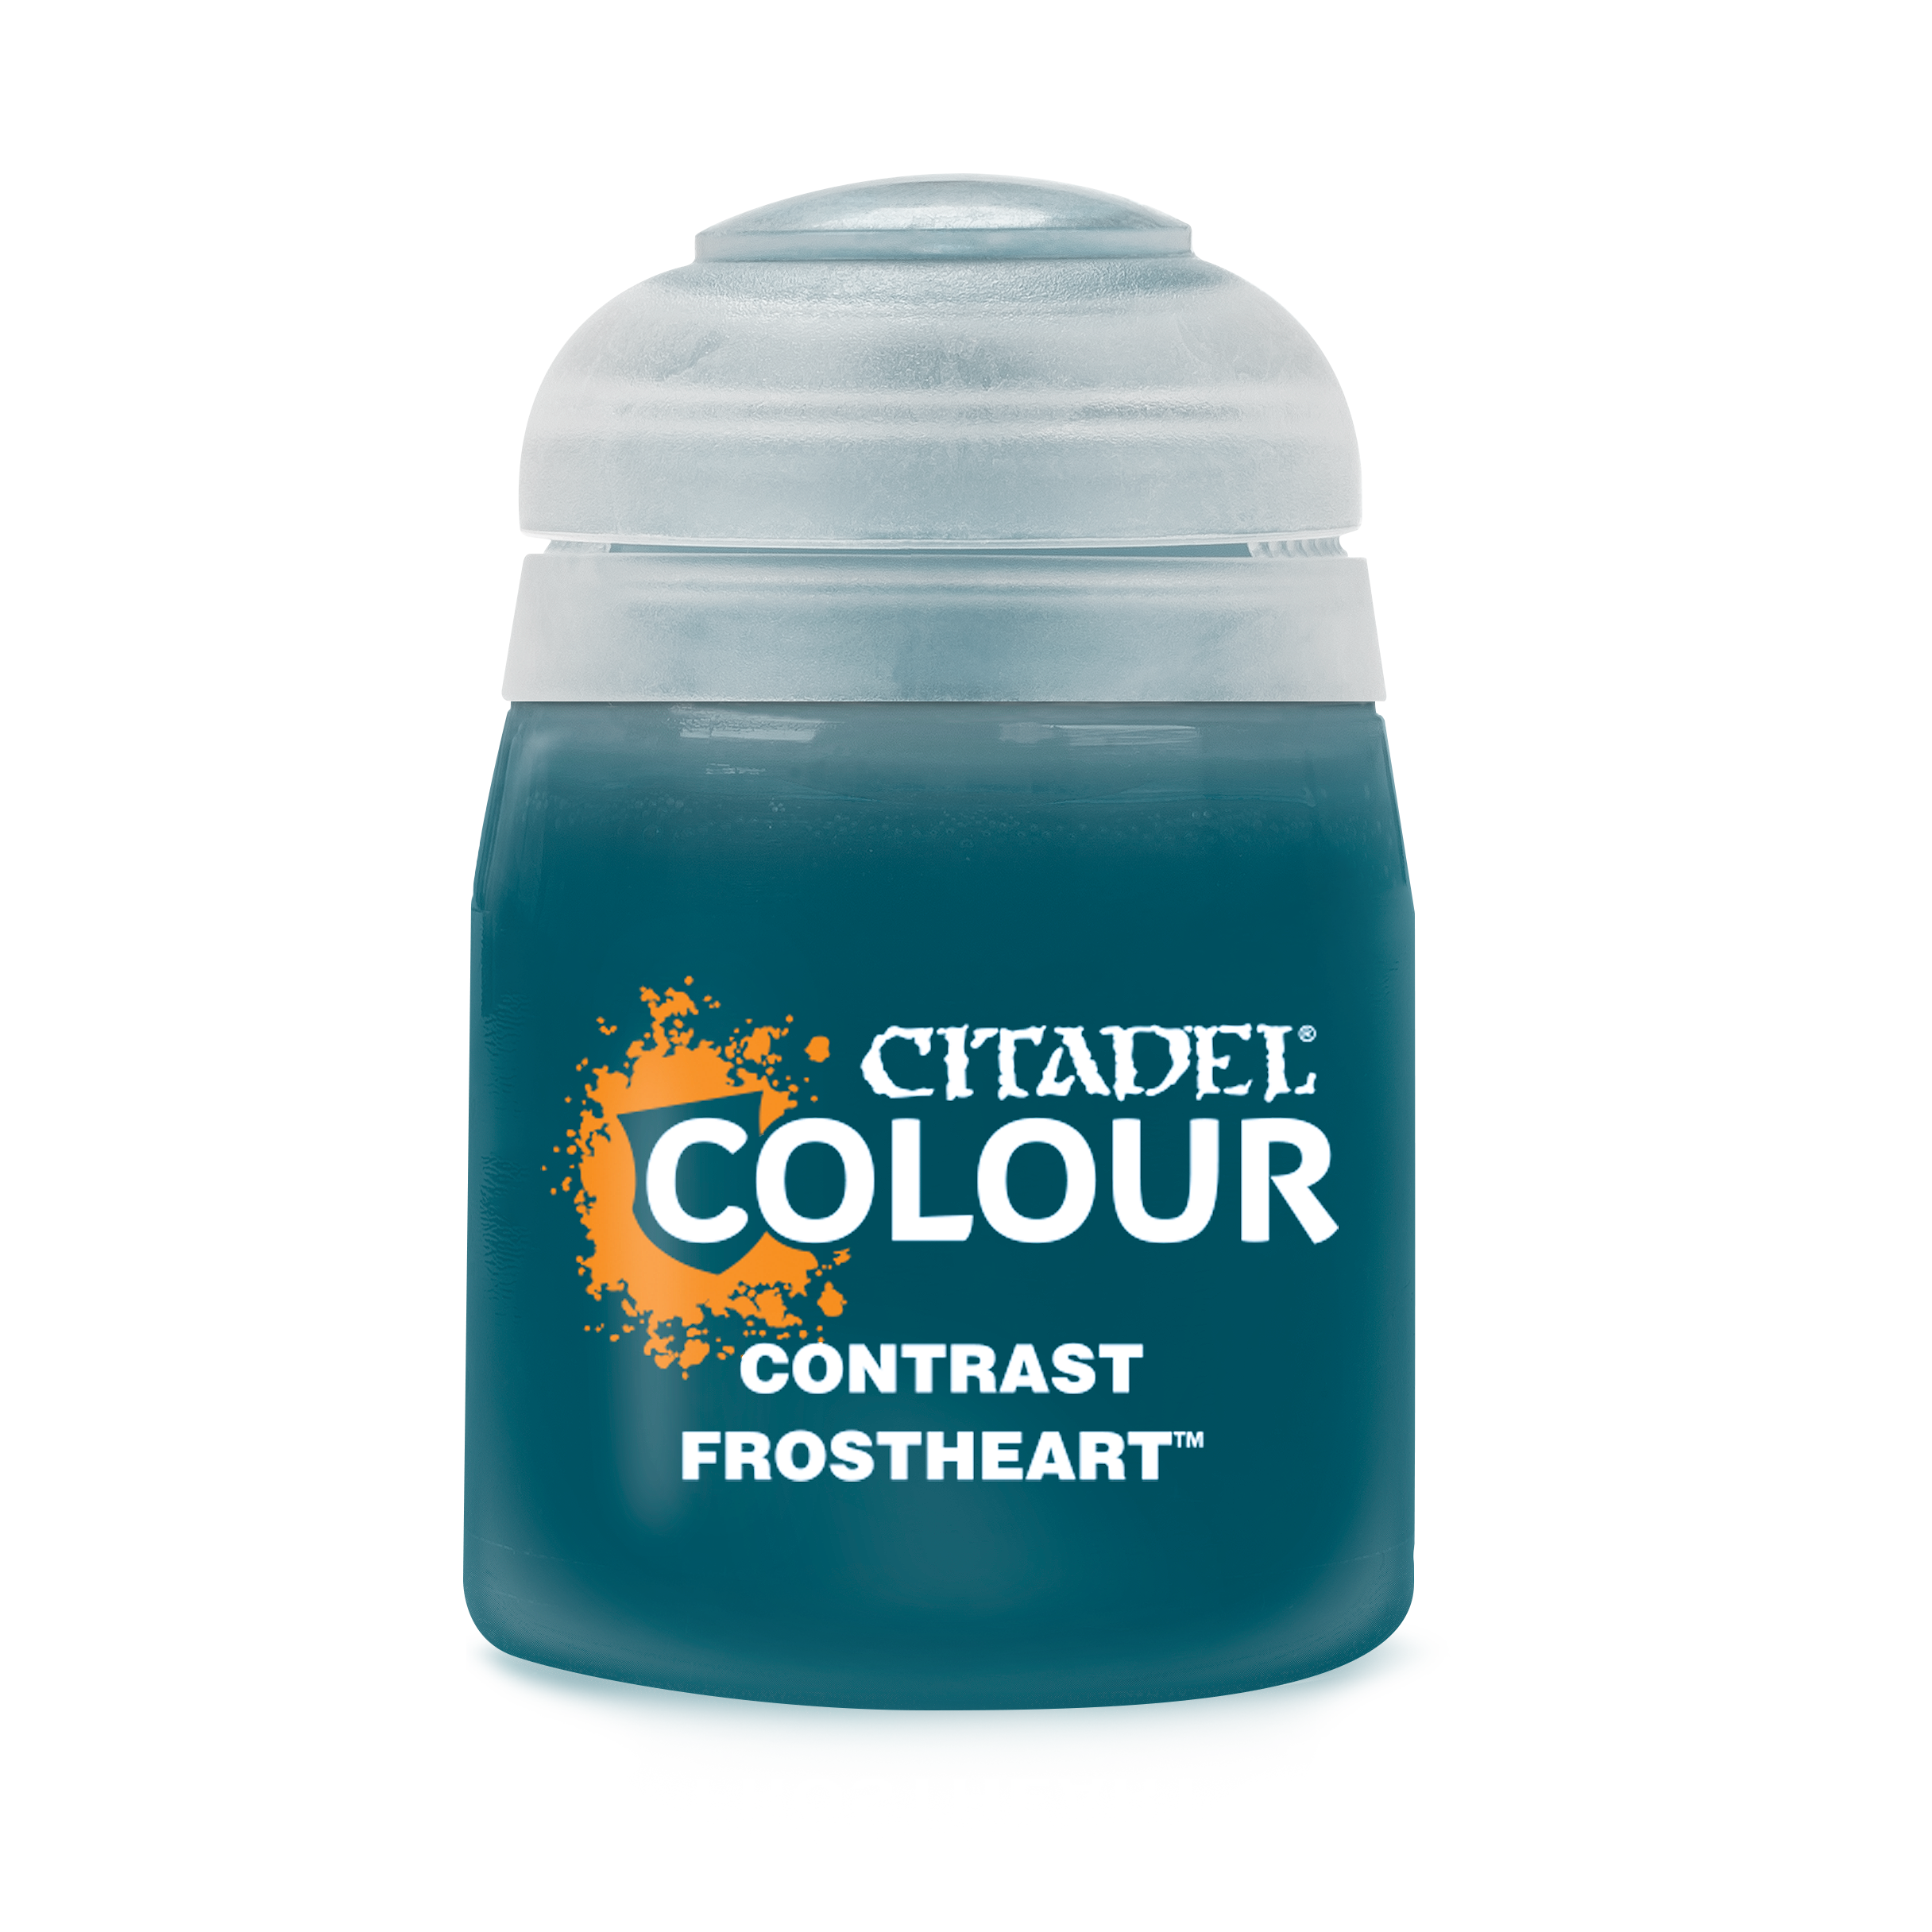 Contrast Frostheart - Citadel Colour